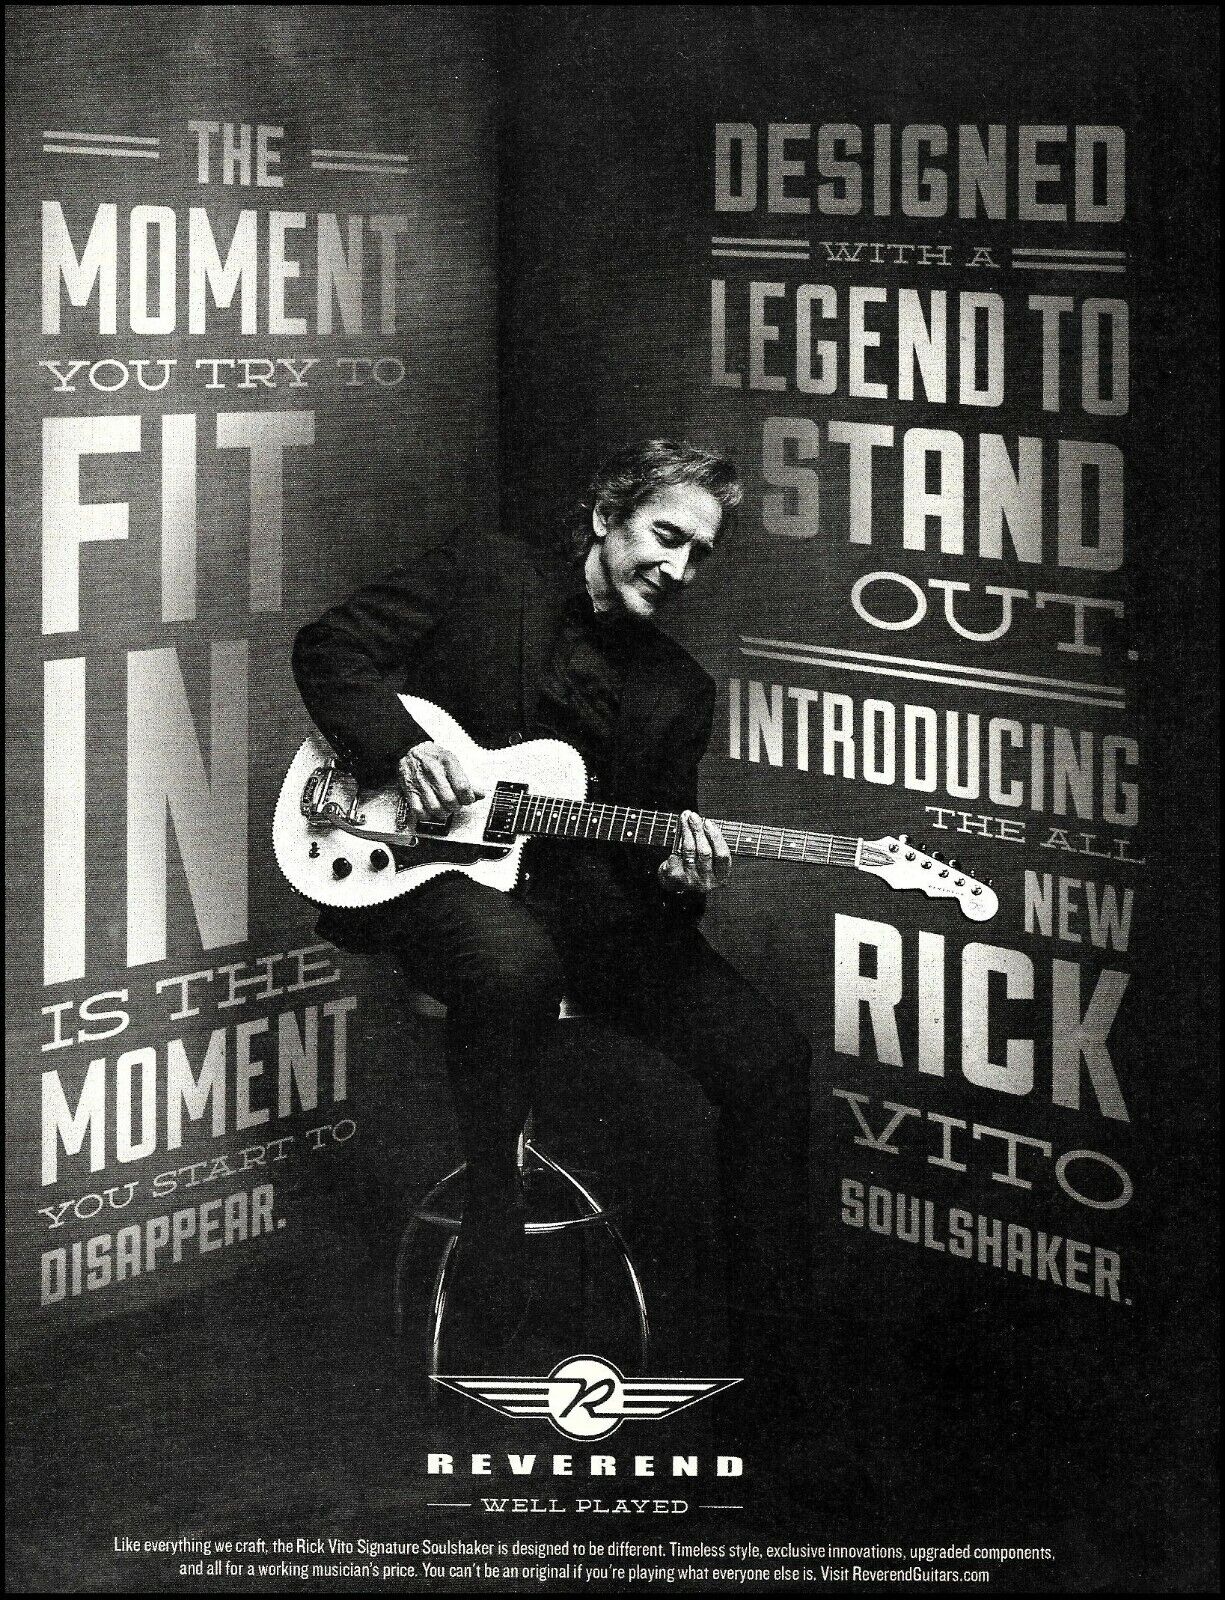 Fleetwood Mac Rick Vito Soulshaker Signature Reverend guitar advertisement print